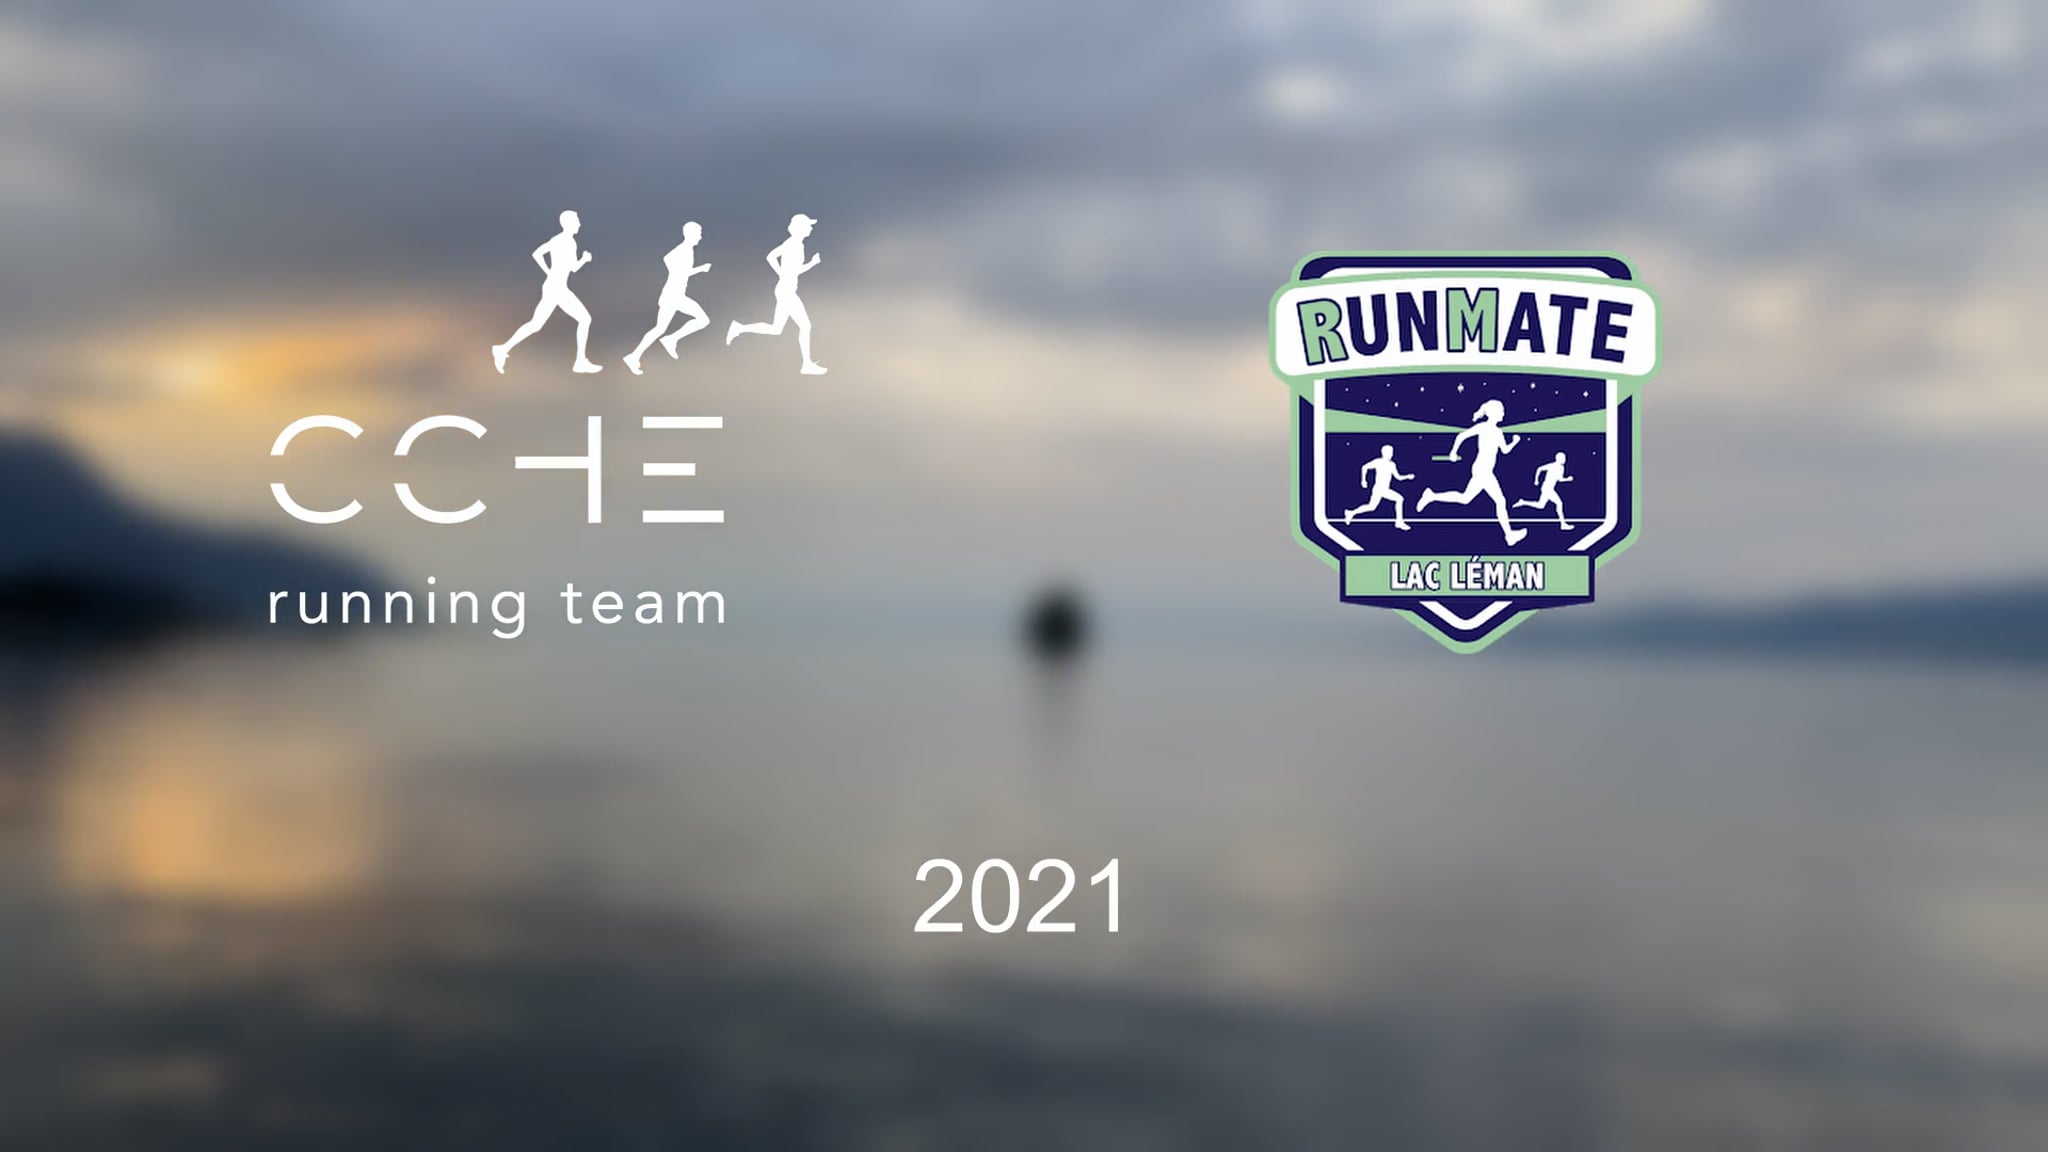 CCHE Running Team - Runmate 2021